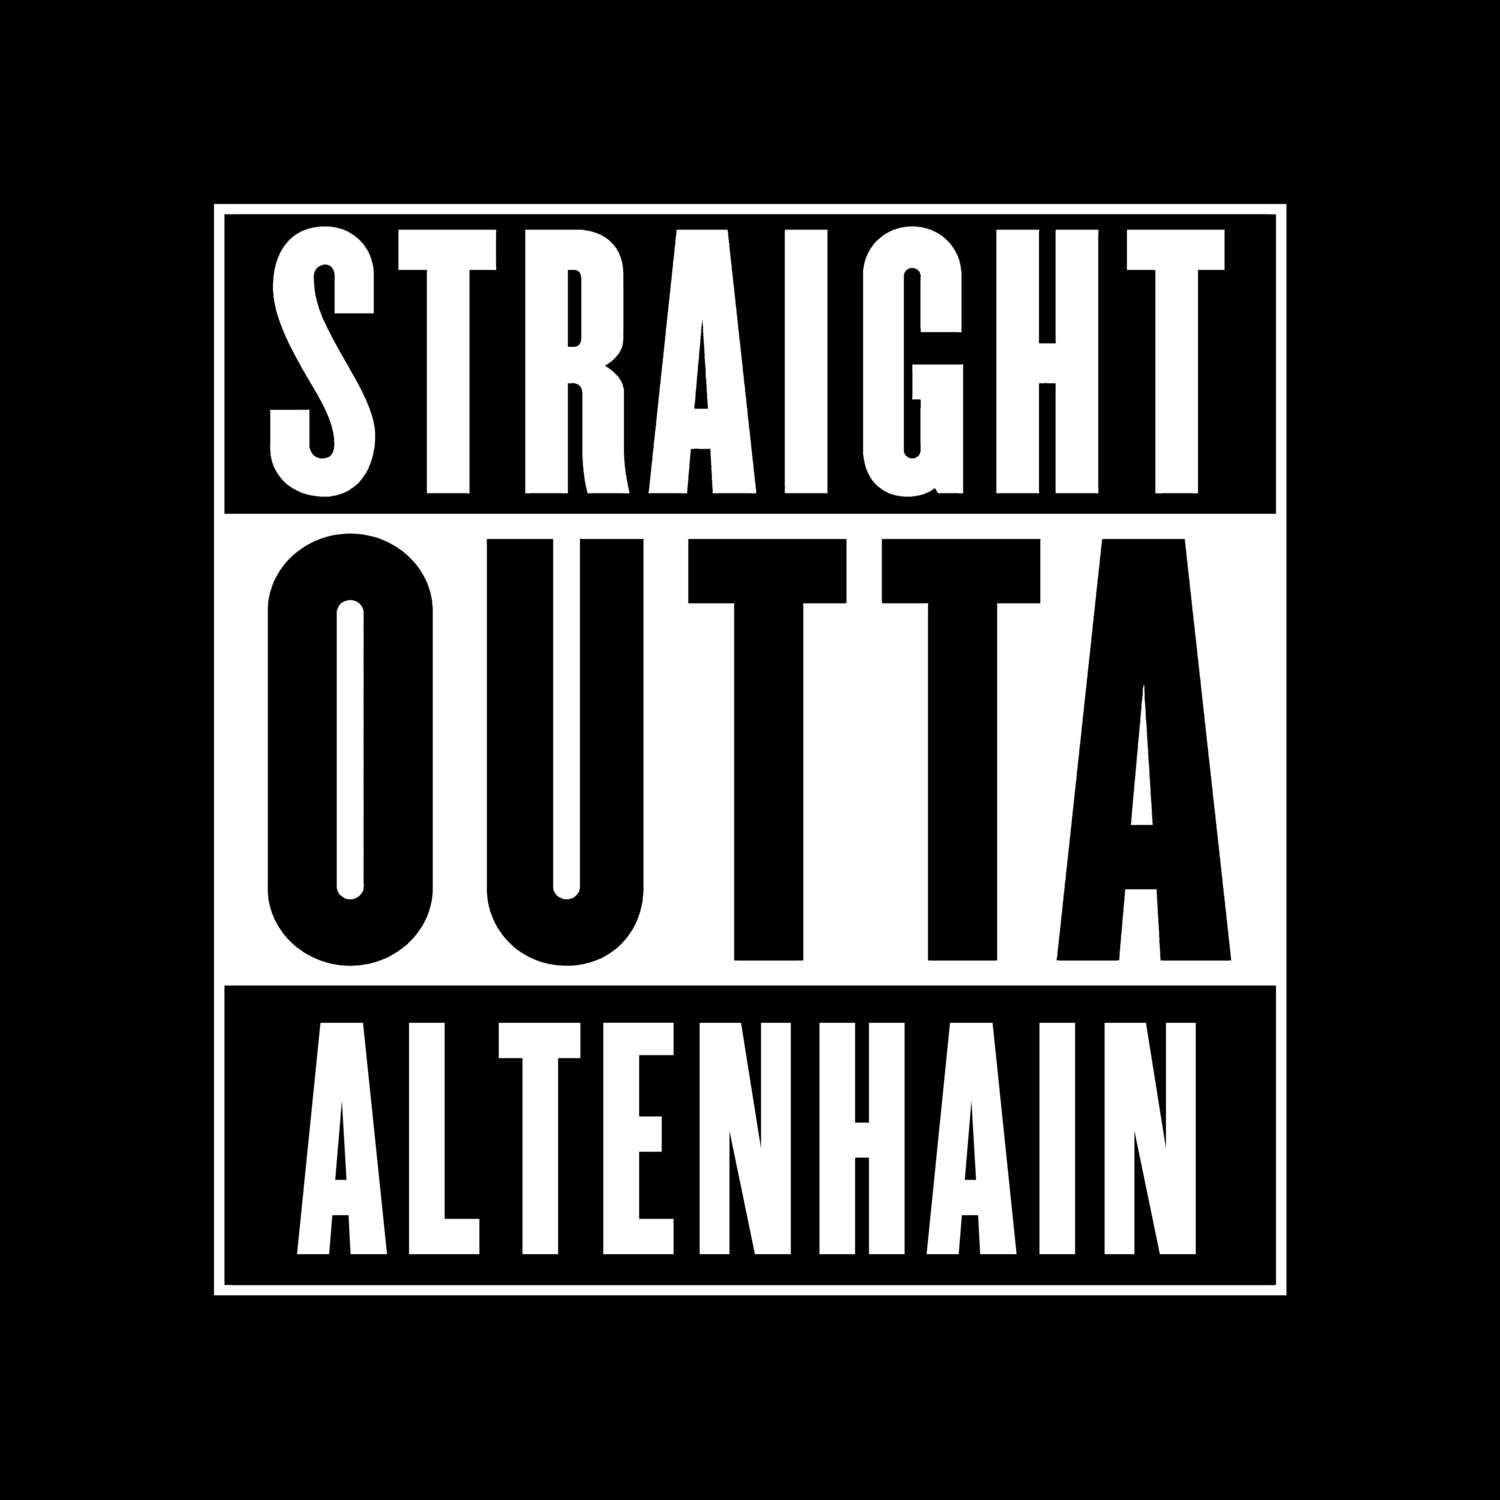 Altenhain T-Shirt »Straight Outta«